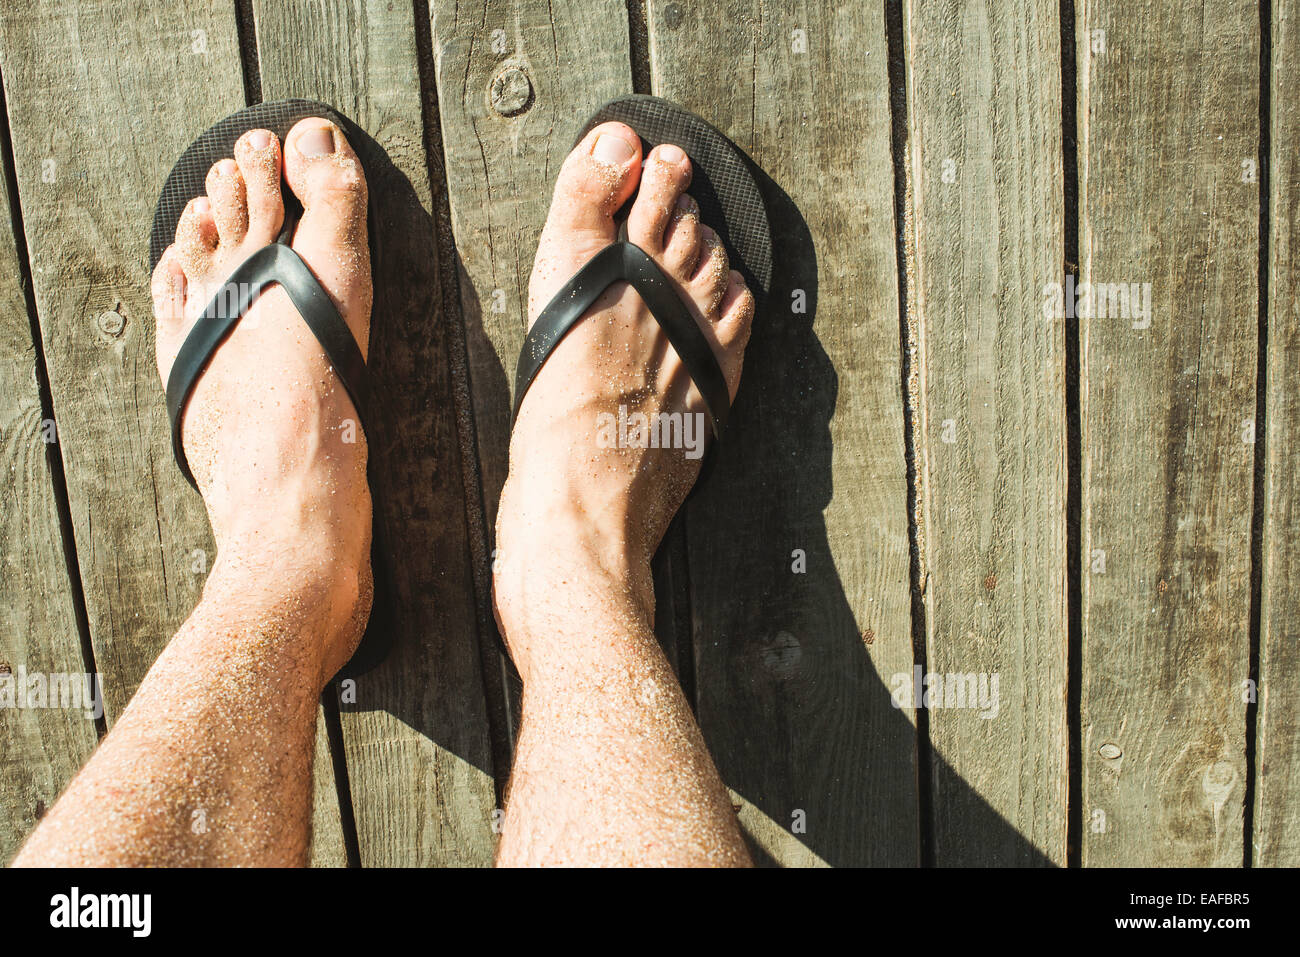 https://c8.alamy.com/comp/EAFBR5/foot-in-thongs-on-the-beach-EAFBR5.jpg